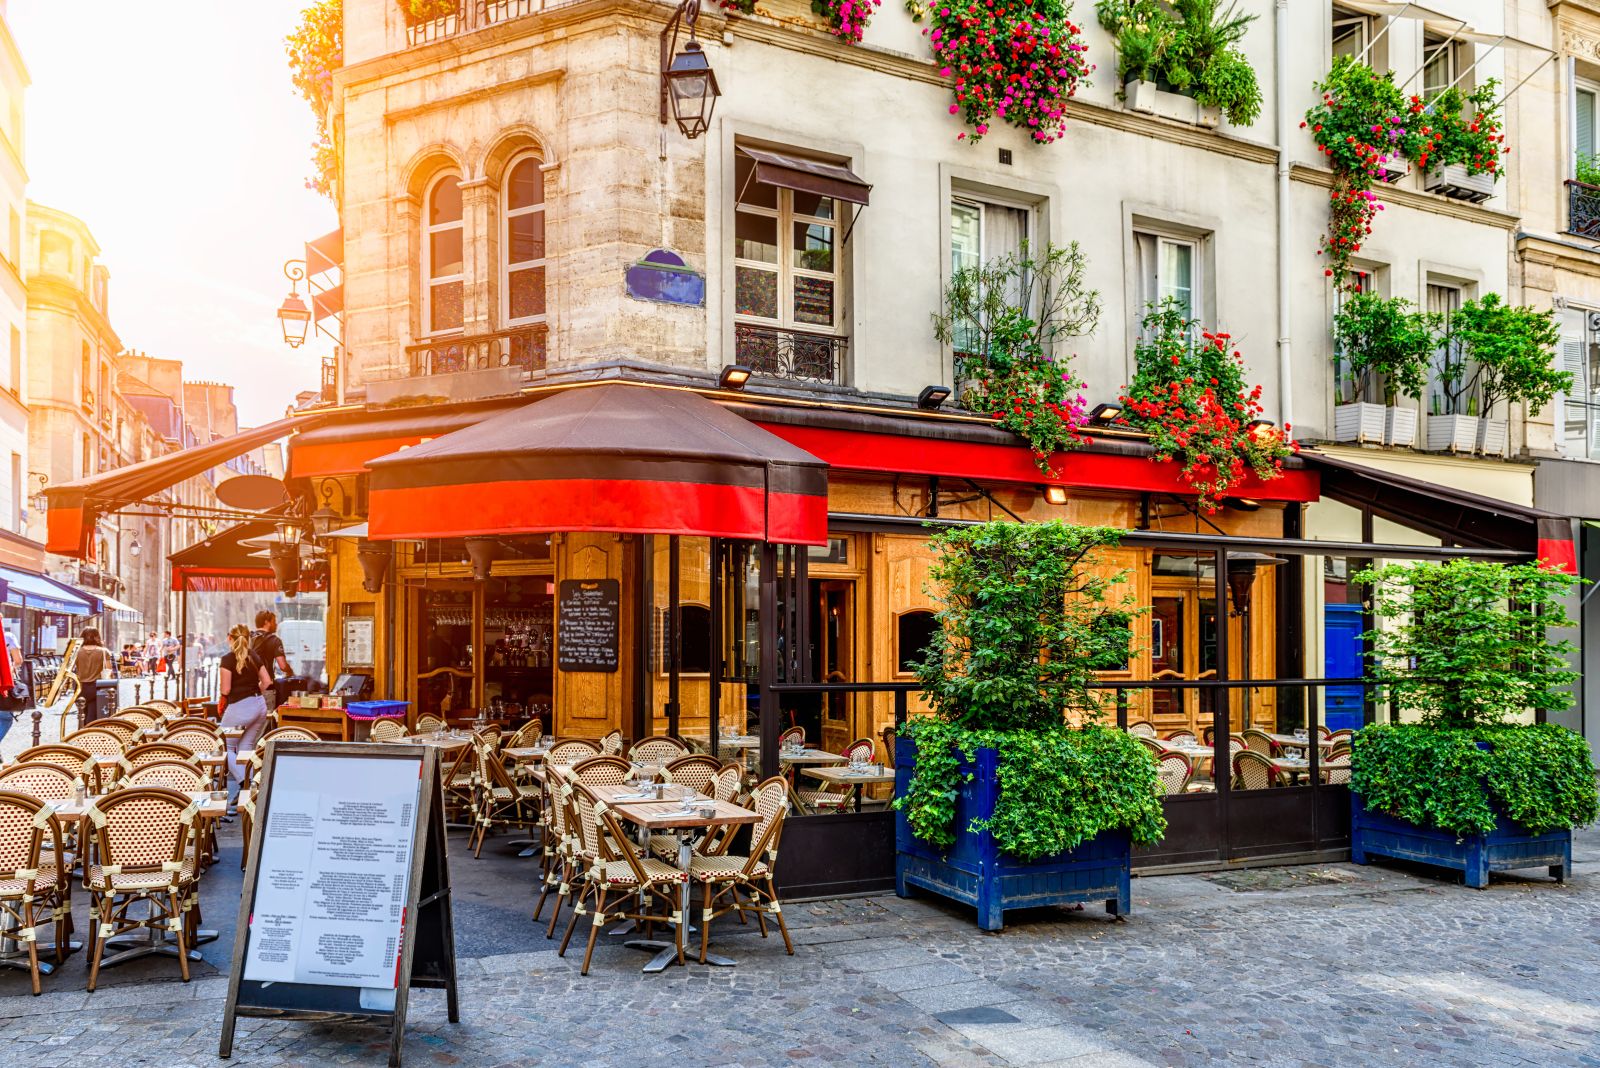 Charming restaurant on a street corner in Paris